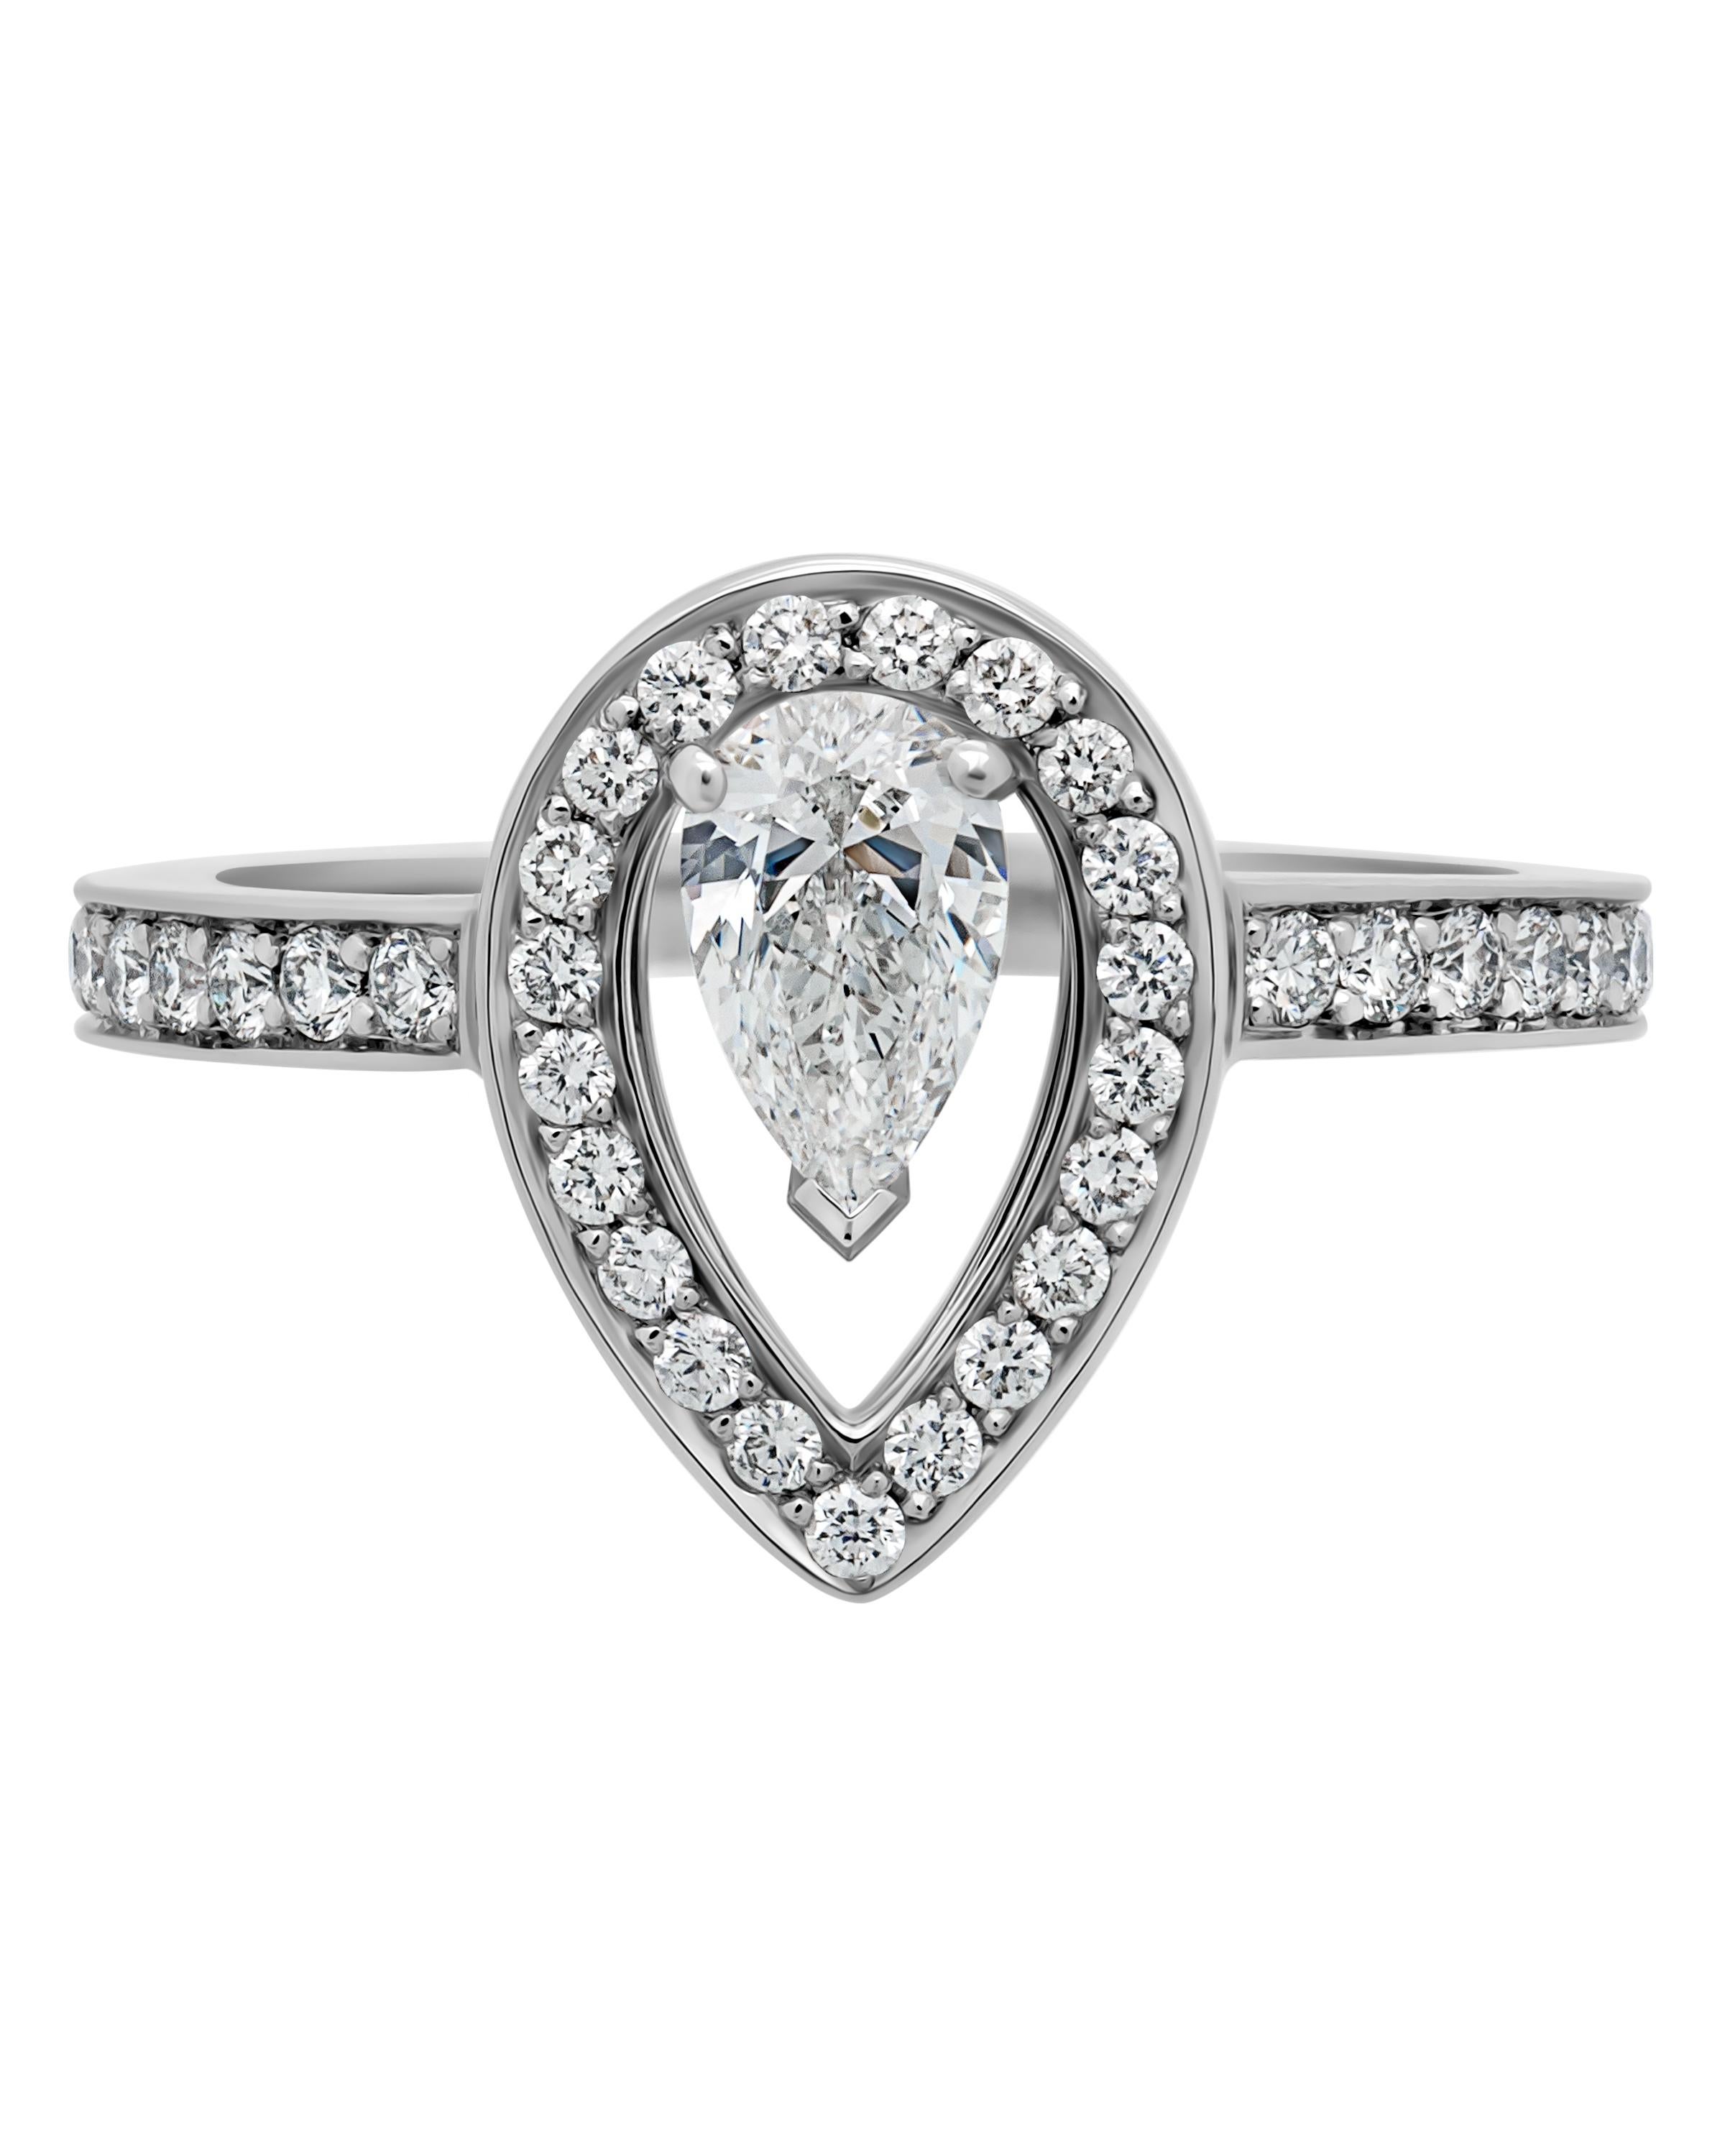 FRED Lovelight Platinum Diamond Engagement Ring sz 5.25